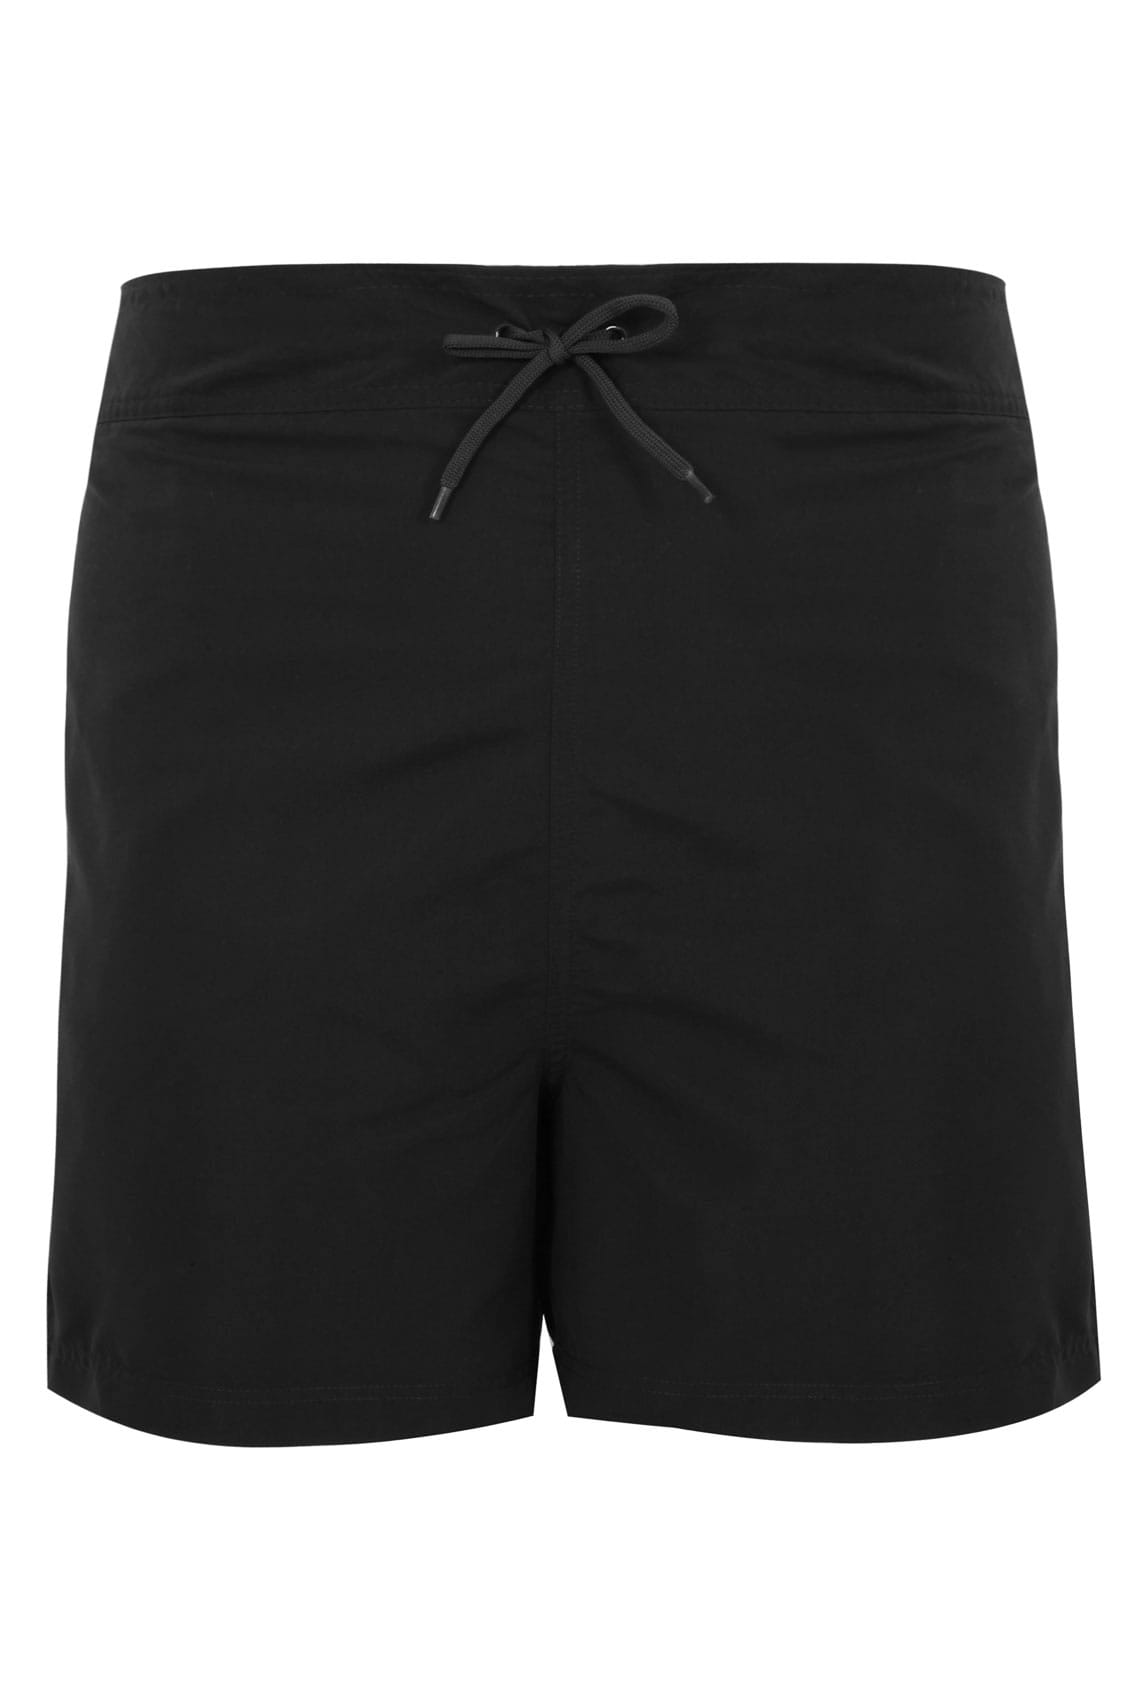 Black Multi-Purpose Swim Shorts With Drawstring Waist, Plus Size 16 to ...